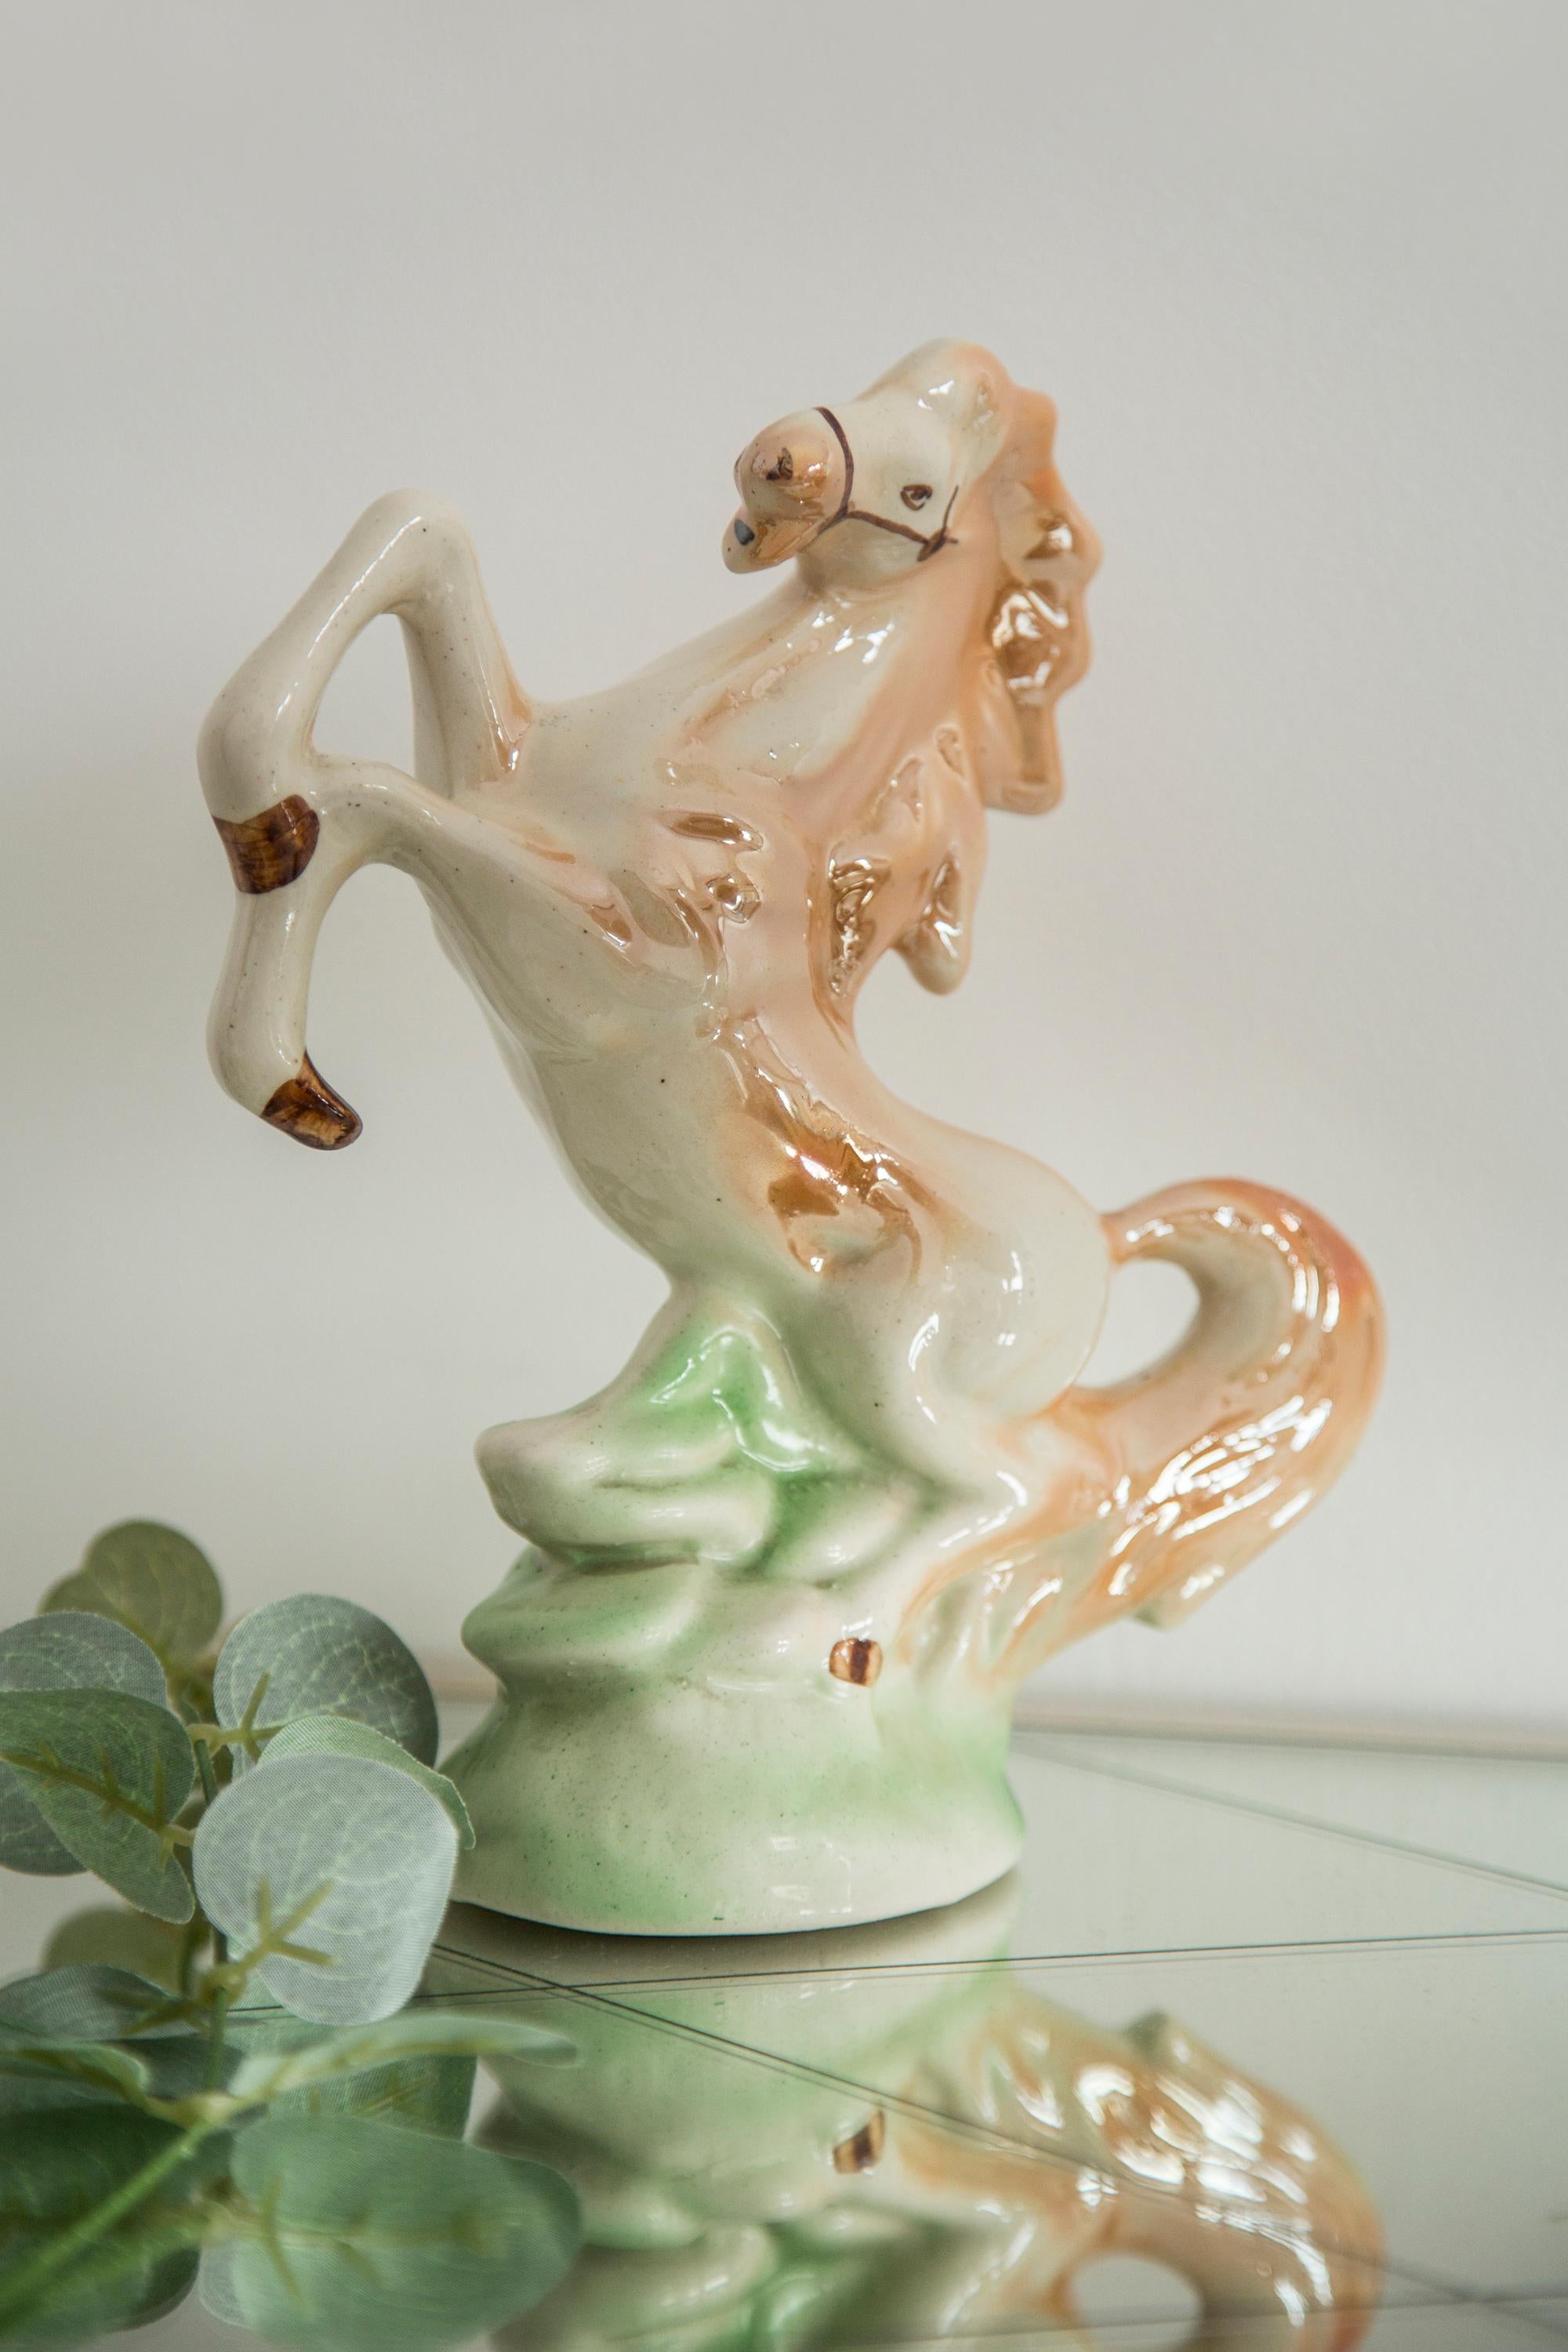 Hand-Painted Midcentury Ceramic Porcelain Decorative Horse Sculpture, Europe, 1960s For Sale